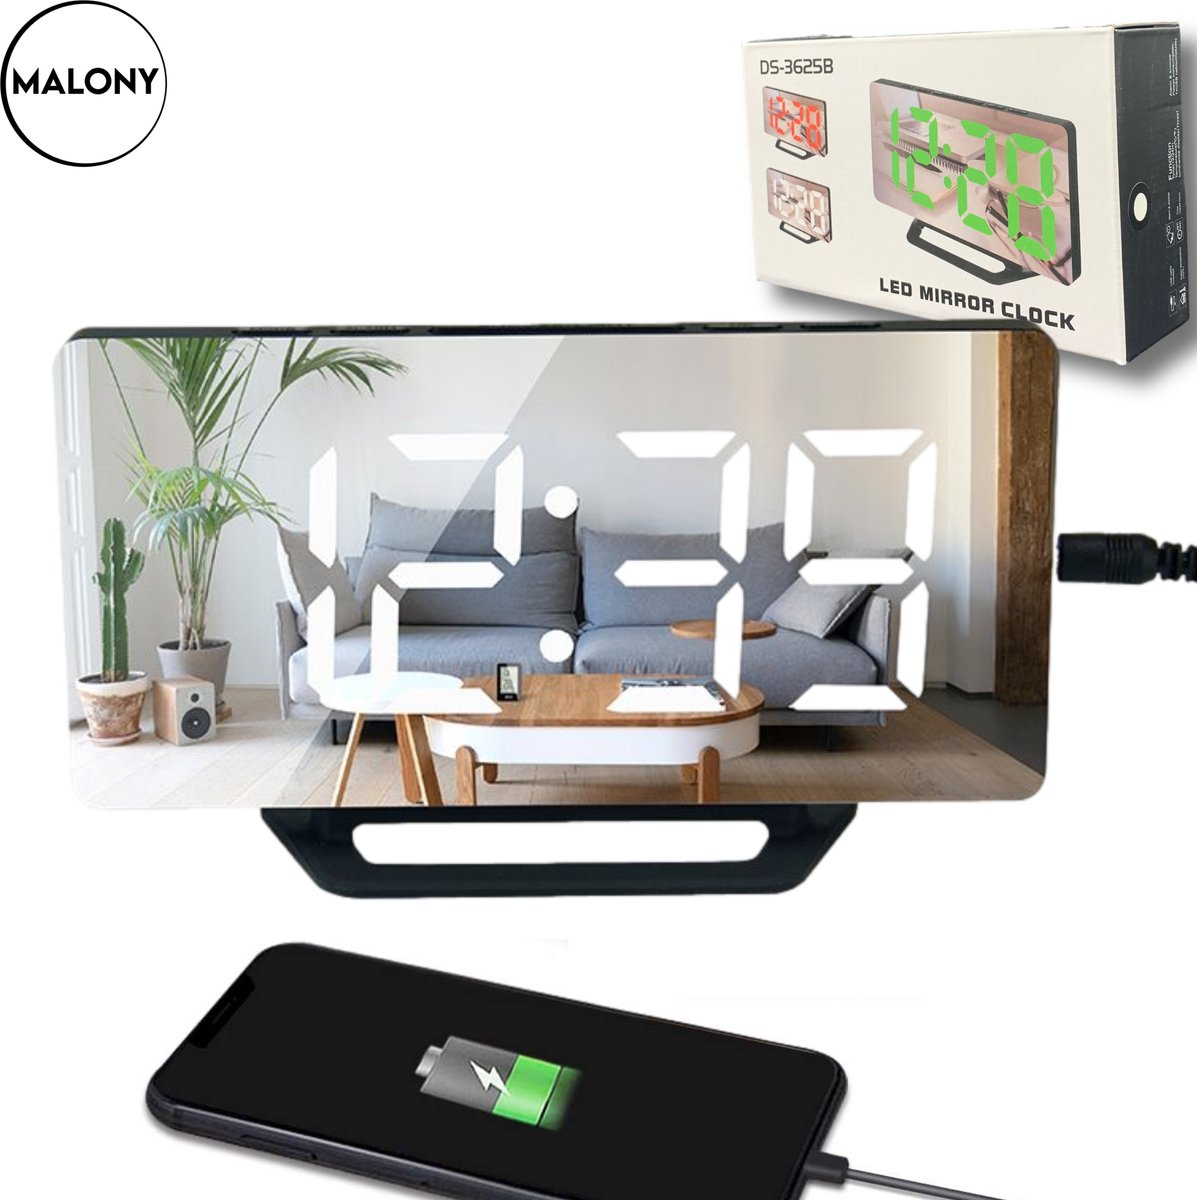 Malony Digitale Wekker - LED Klok - 2 Usb Aansluitingen voor Opladers - Incl. Batterij - Ophangbaar - Wit Led